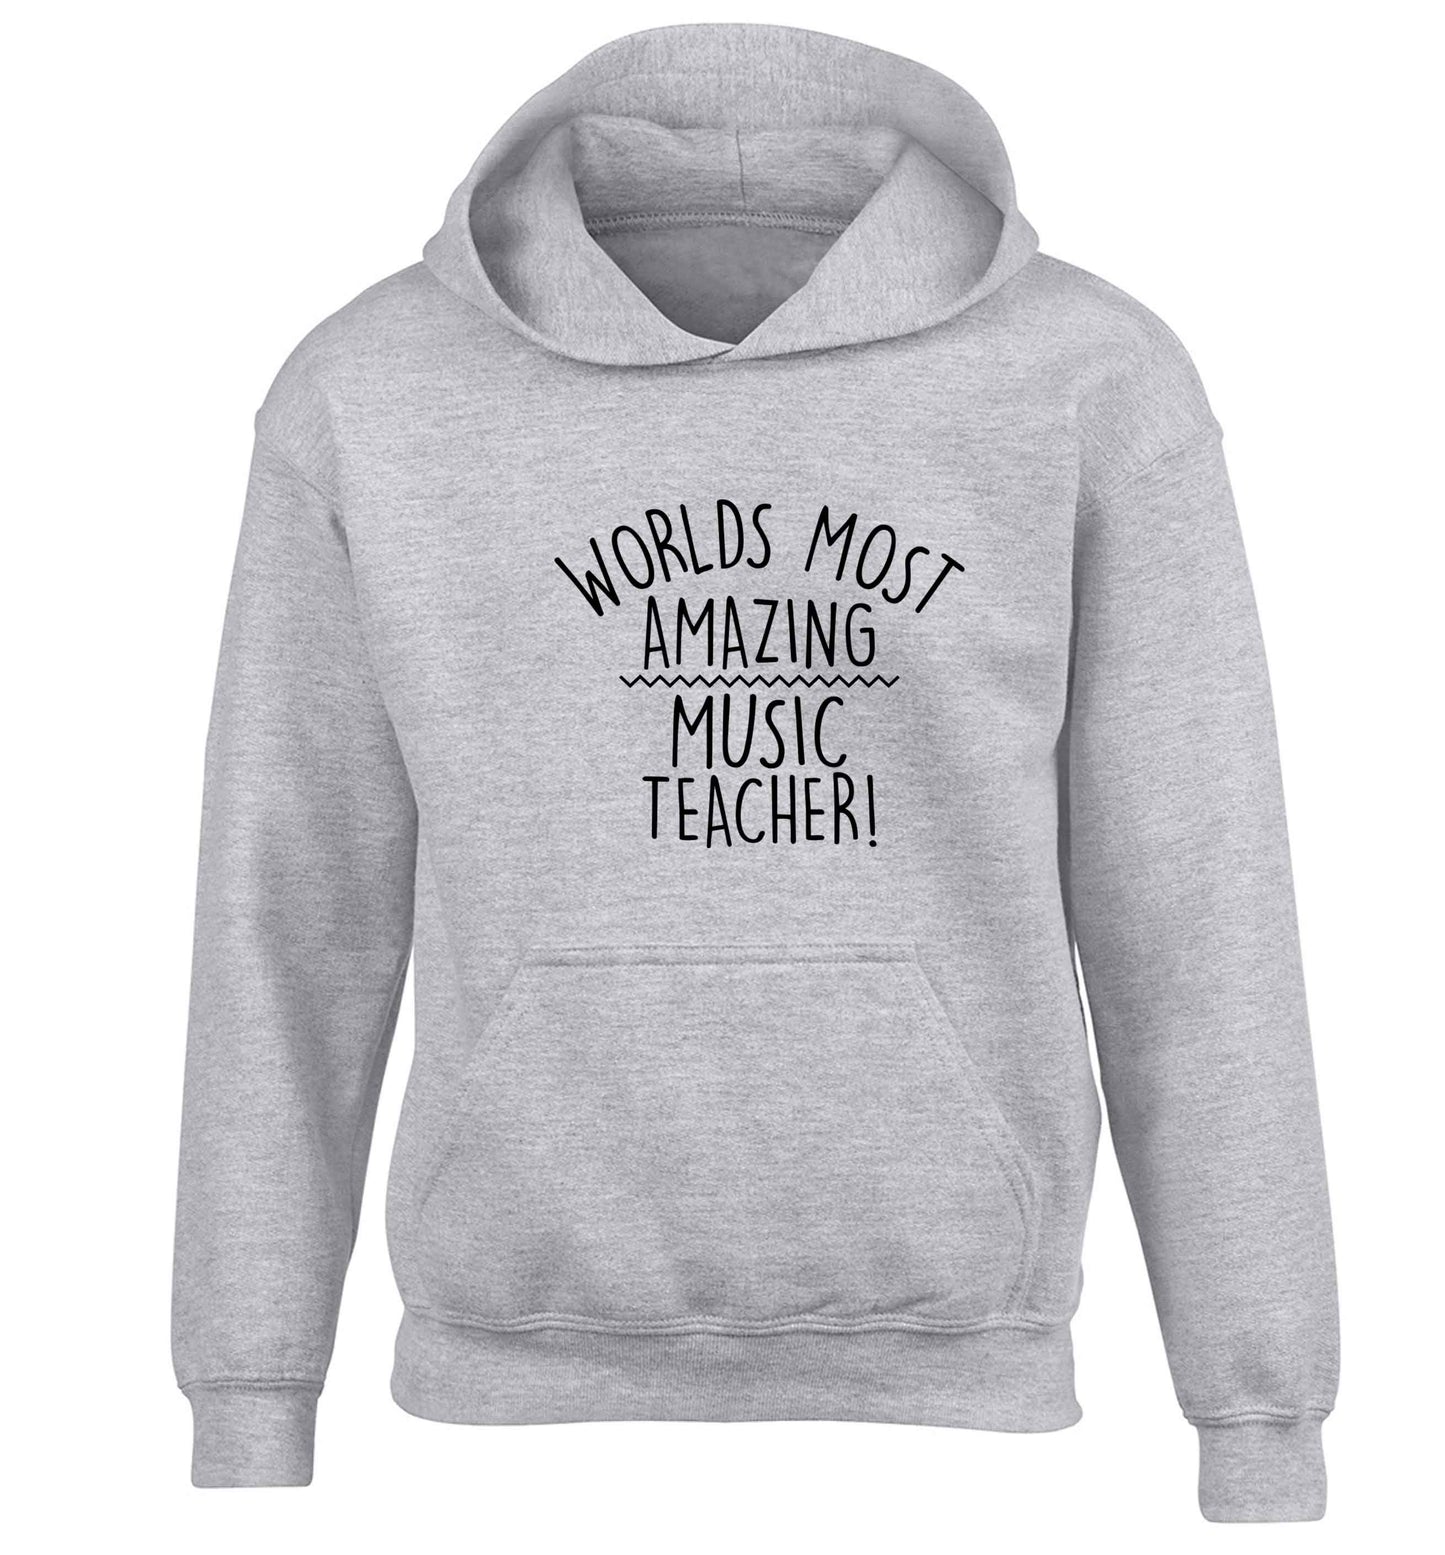 Worlds most amazing music teacher children's grey hoodie 12-13 Years